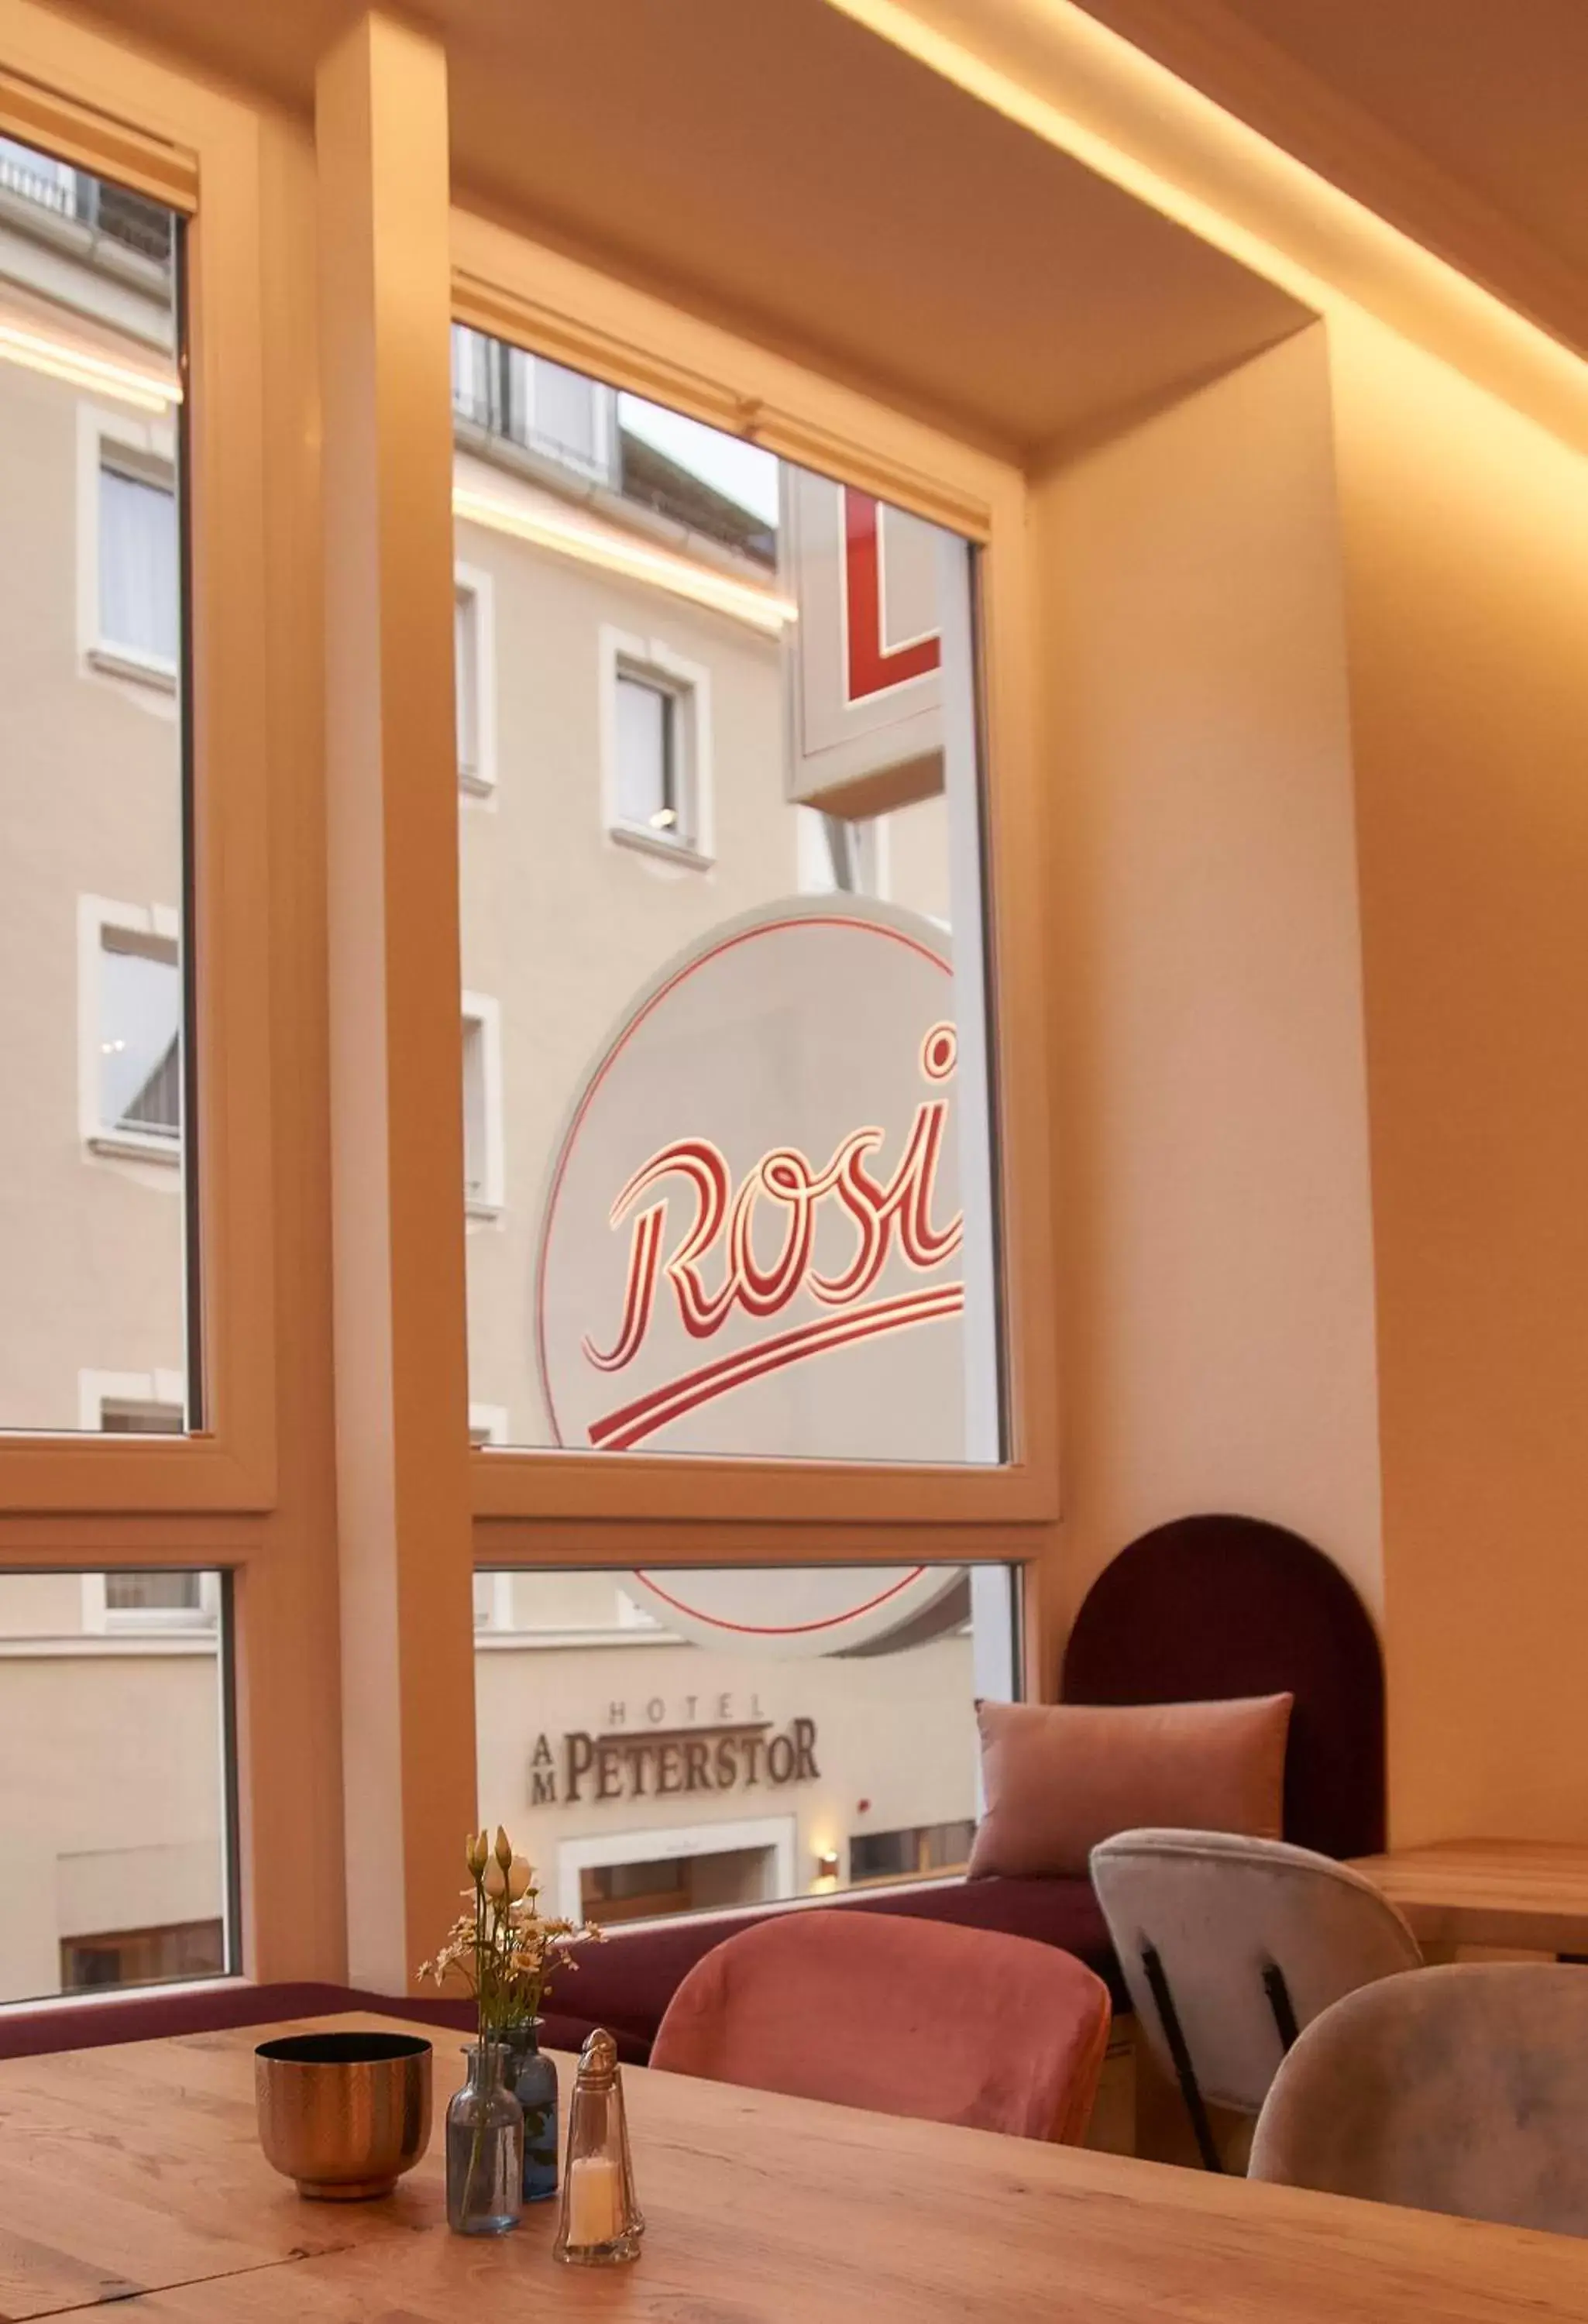 Property logo or sign in Hotel Rosi